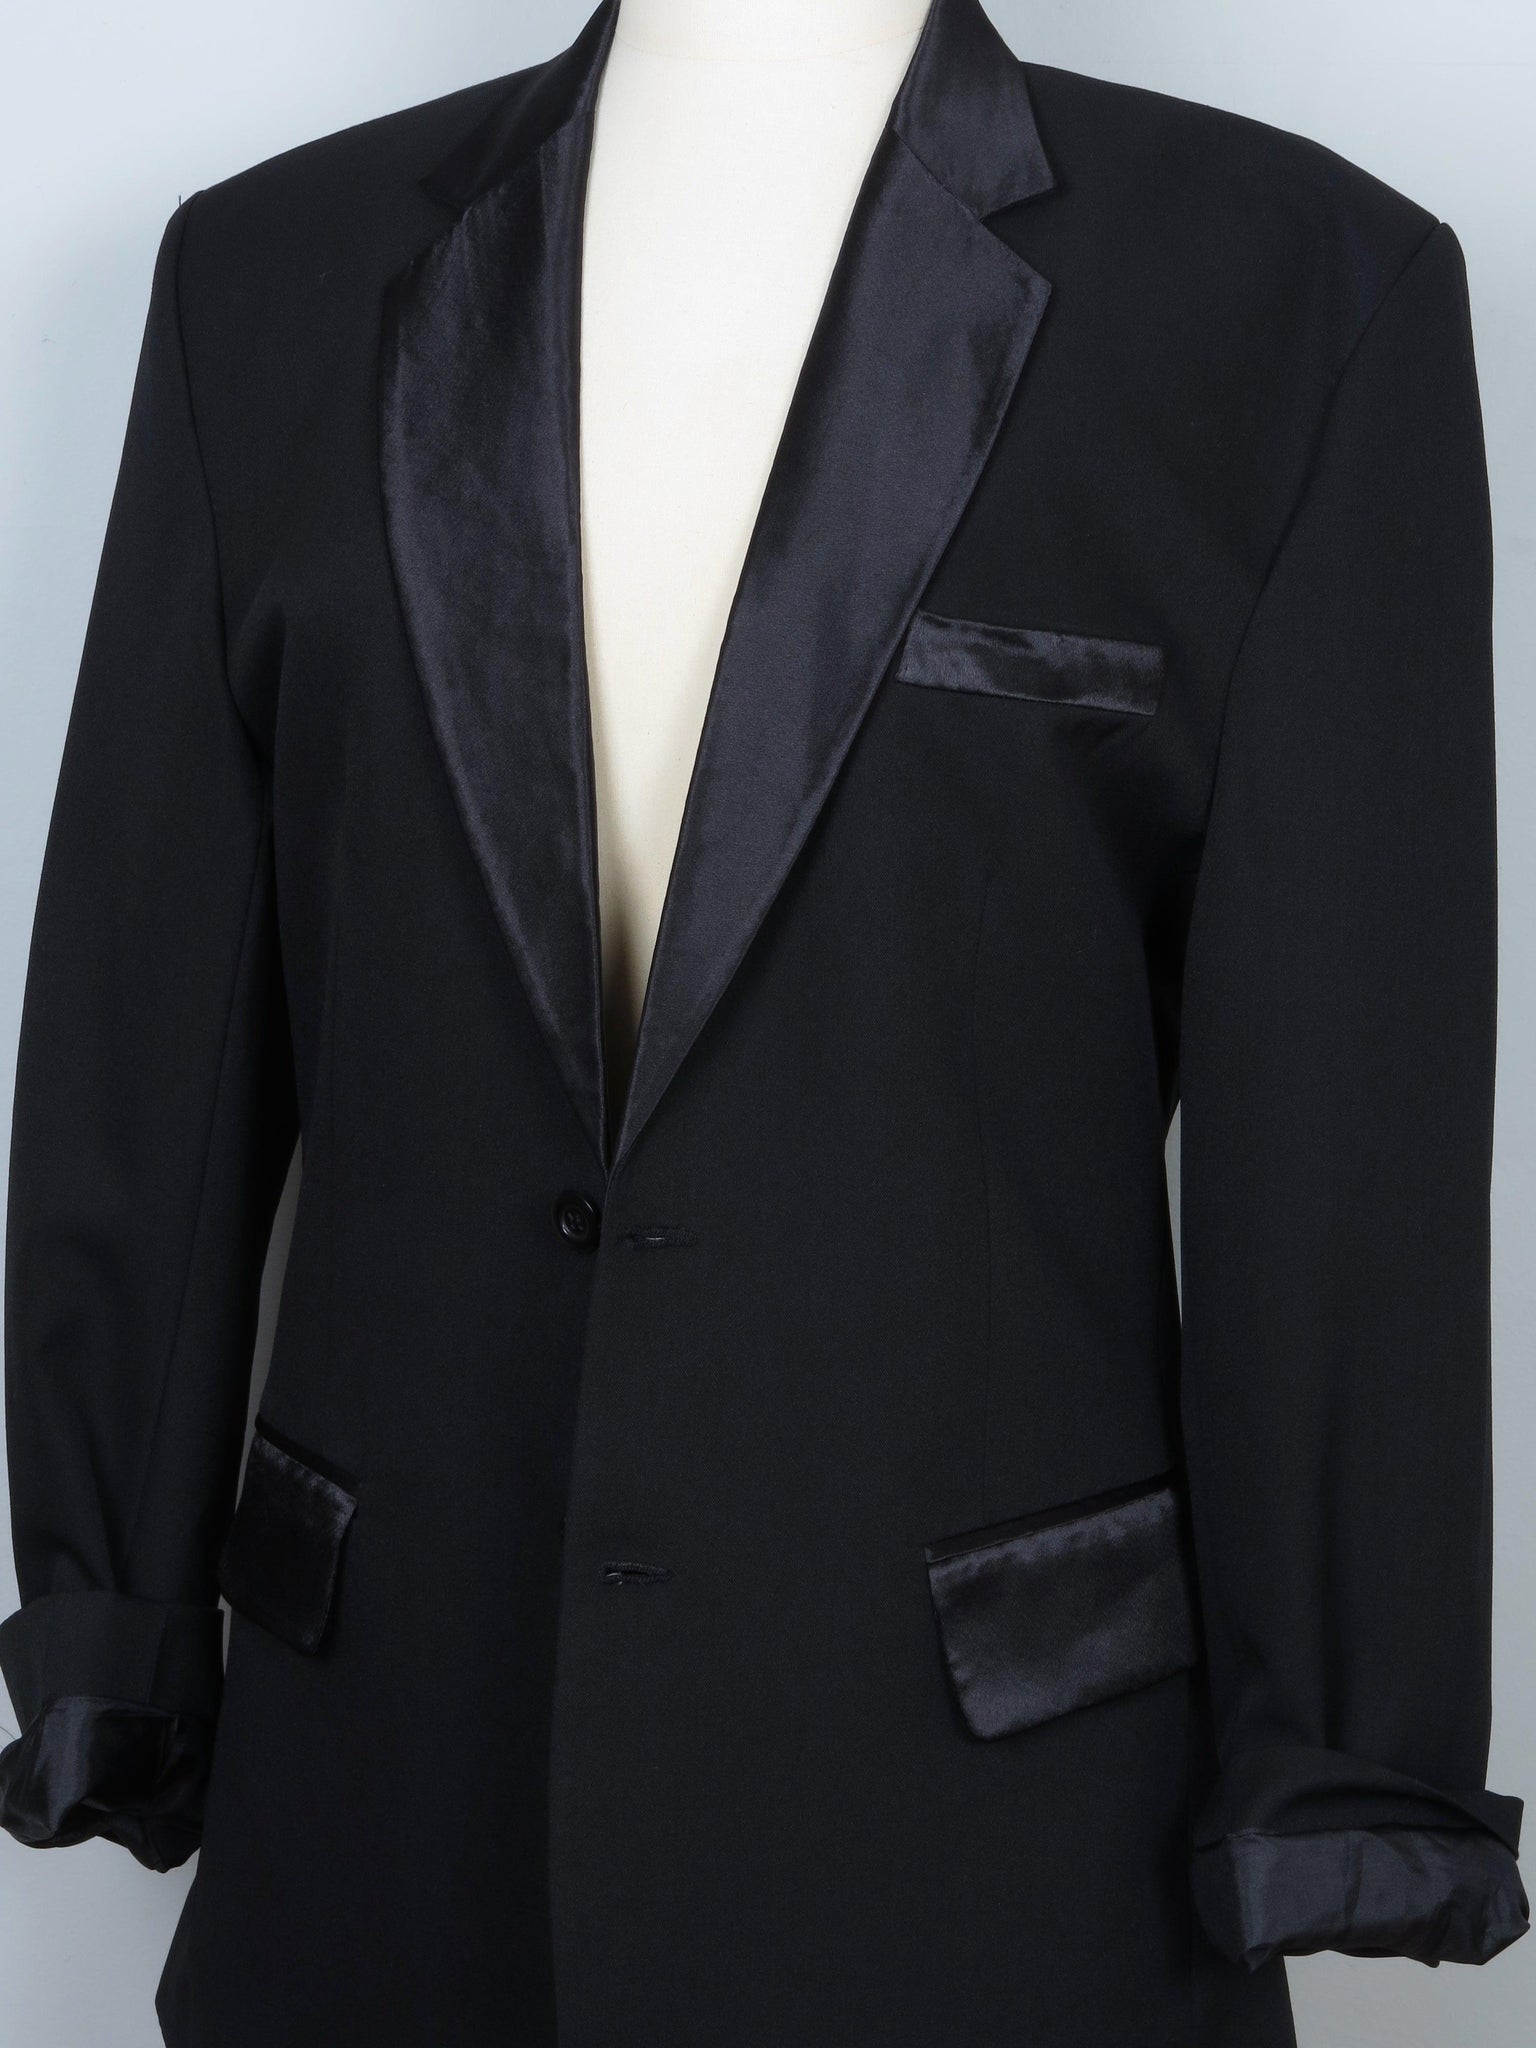 Women’s Black Tuxedo Jacket With Satin Collar & Pockets XS/S - The Harlequin